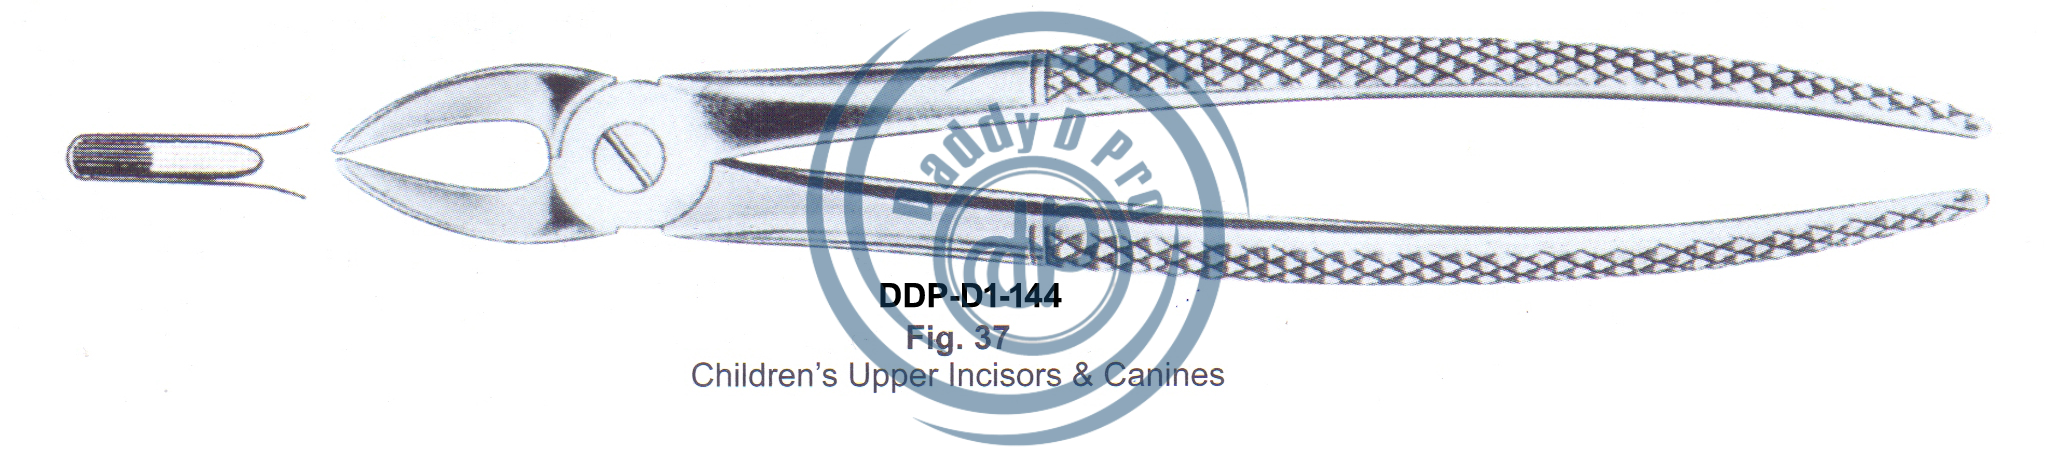 images/DDP-D1-144.png